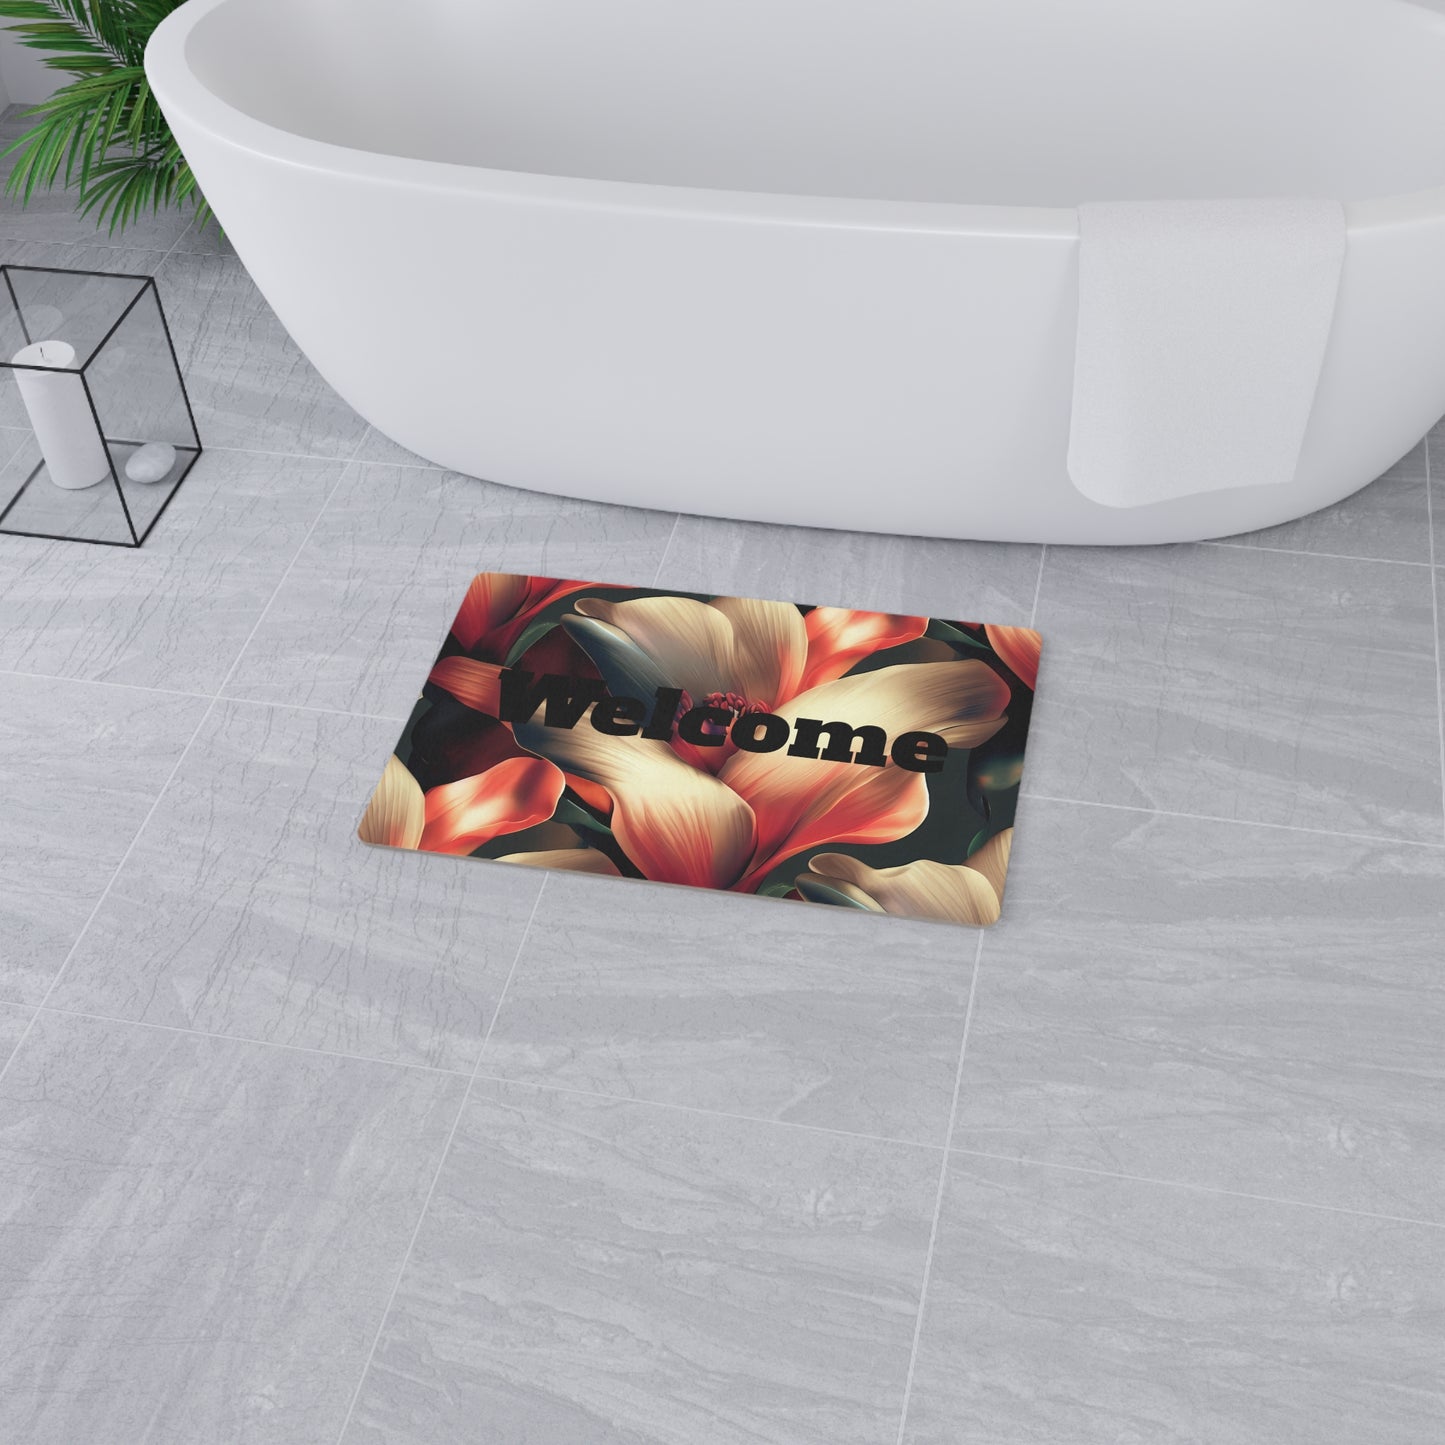 Welcome Floor Mat - Floor Mat The Ultimate Protection for Your Floor